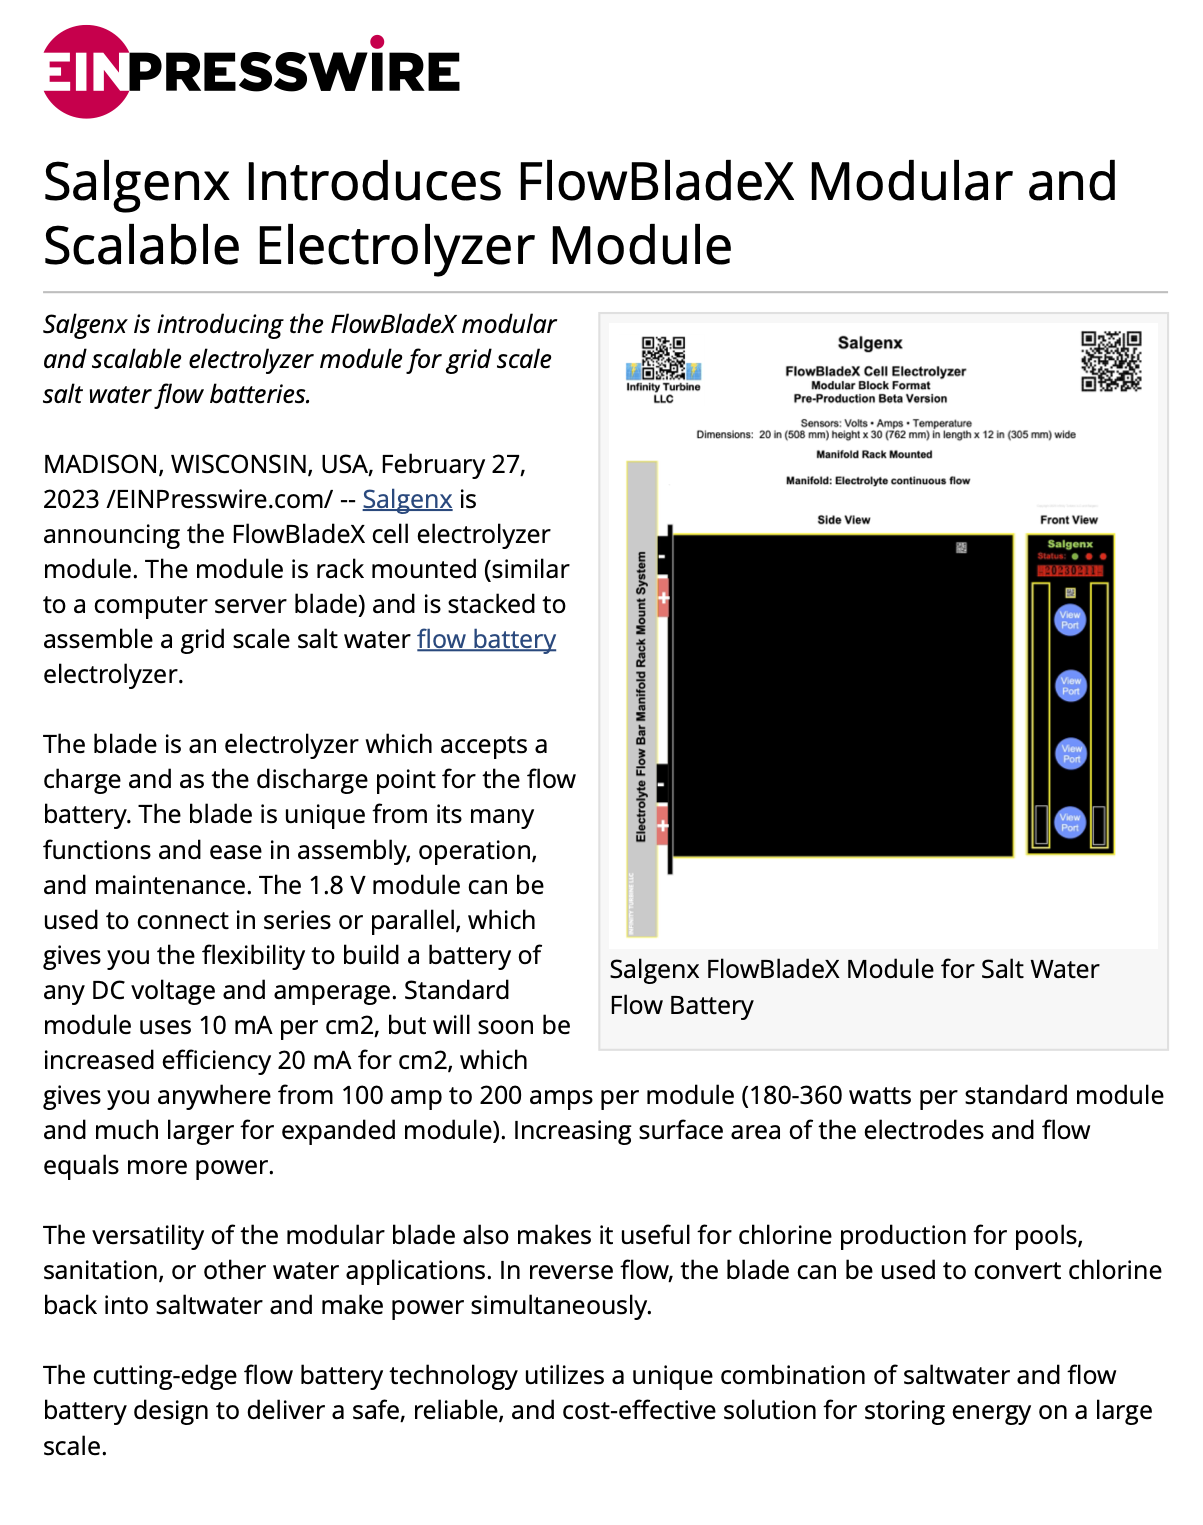 Salgenx Introduces FlowBladeX Modular and Scalable Electrolyzer Module